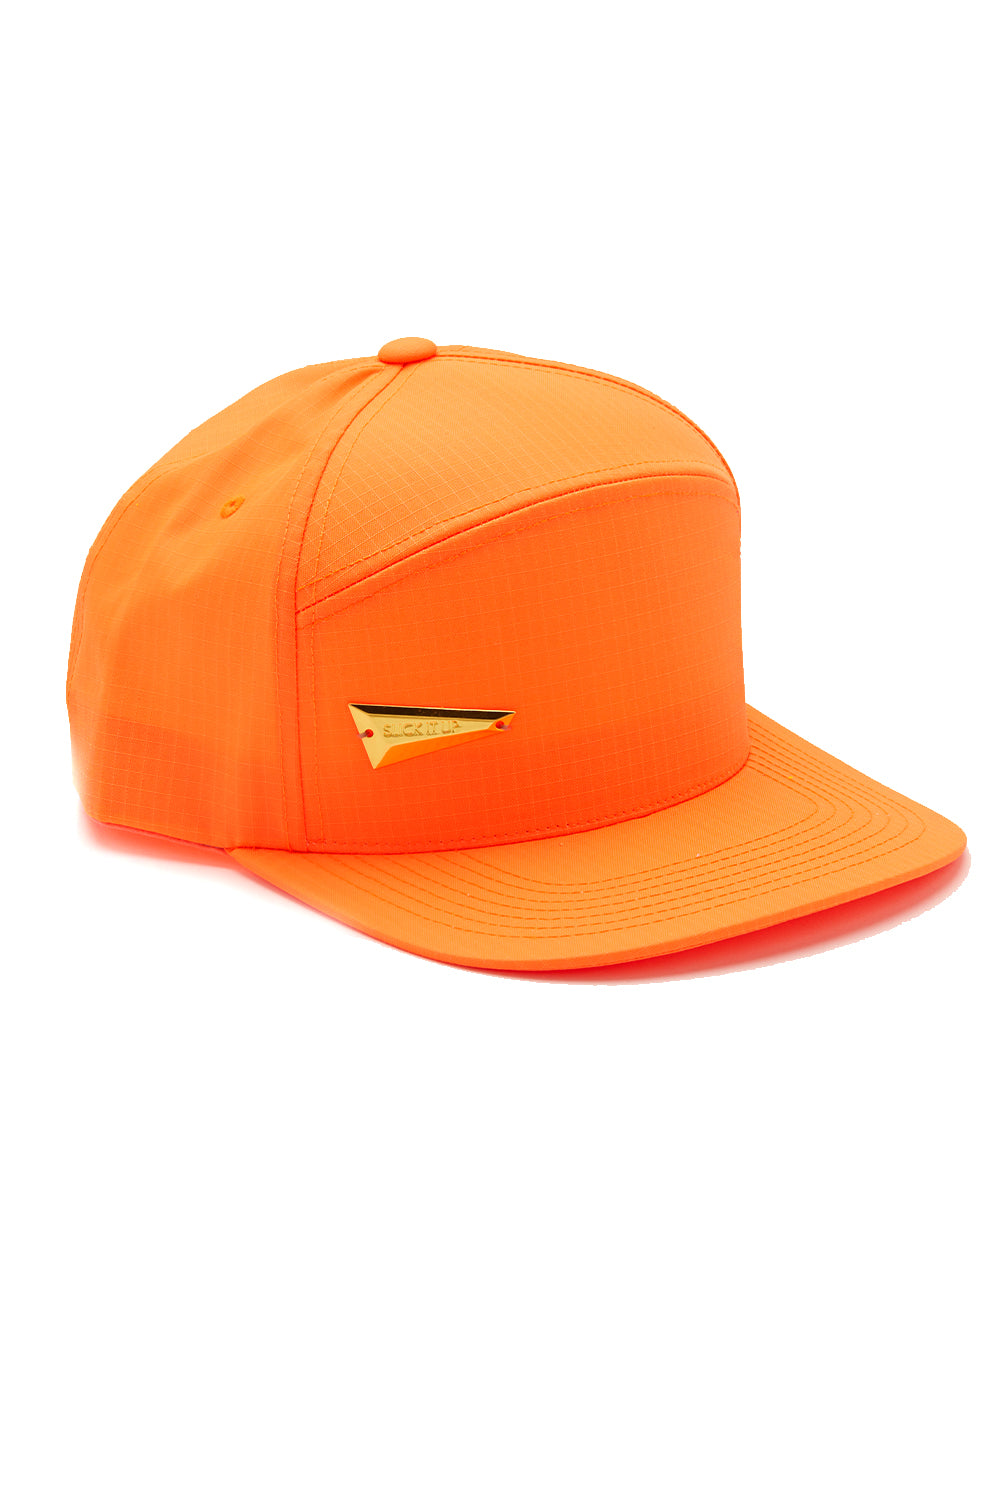 Neon Orange with 18k Gold Plated Razor Snap Back - Slick It Up 